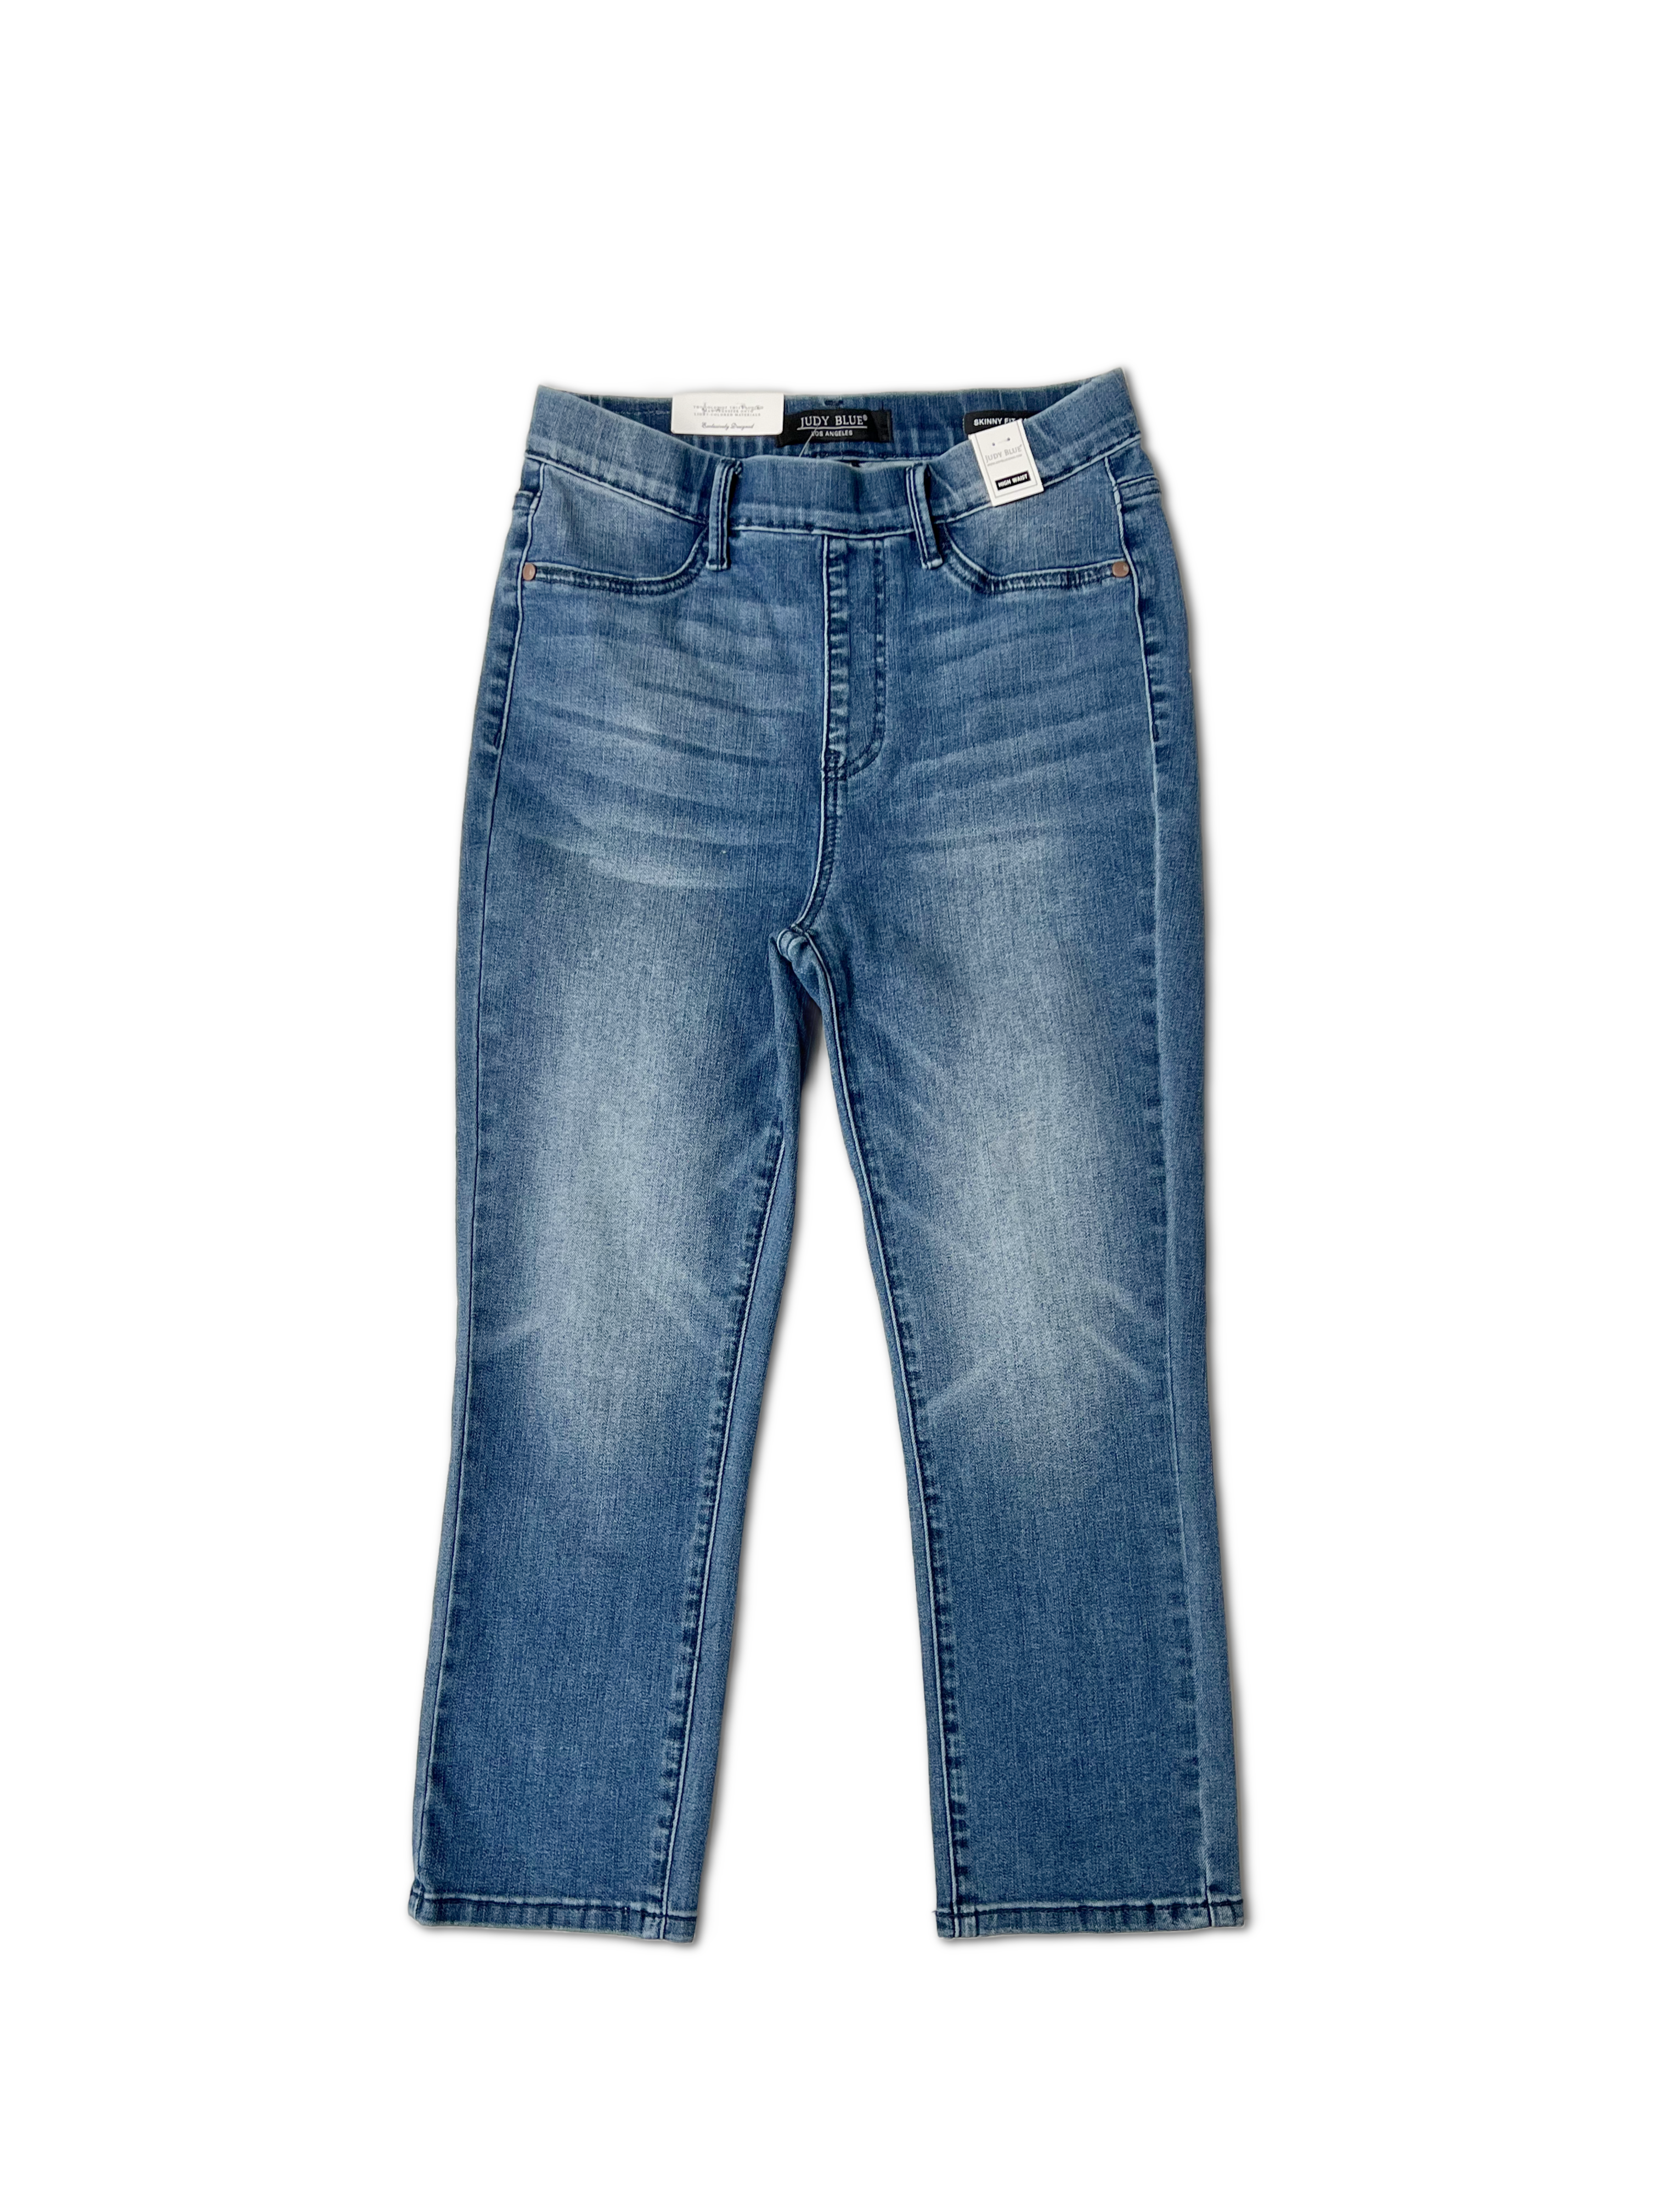 Judy Blue Jeans Capris - Keep It Cool JB Boutique Simplified